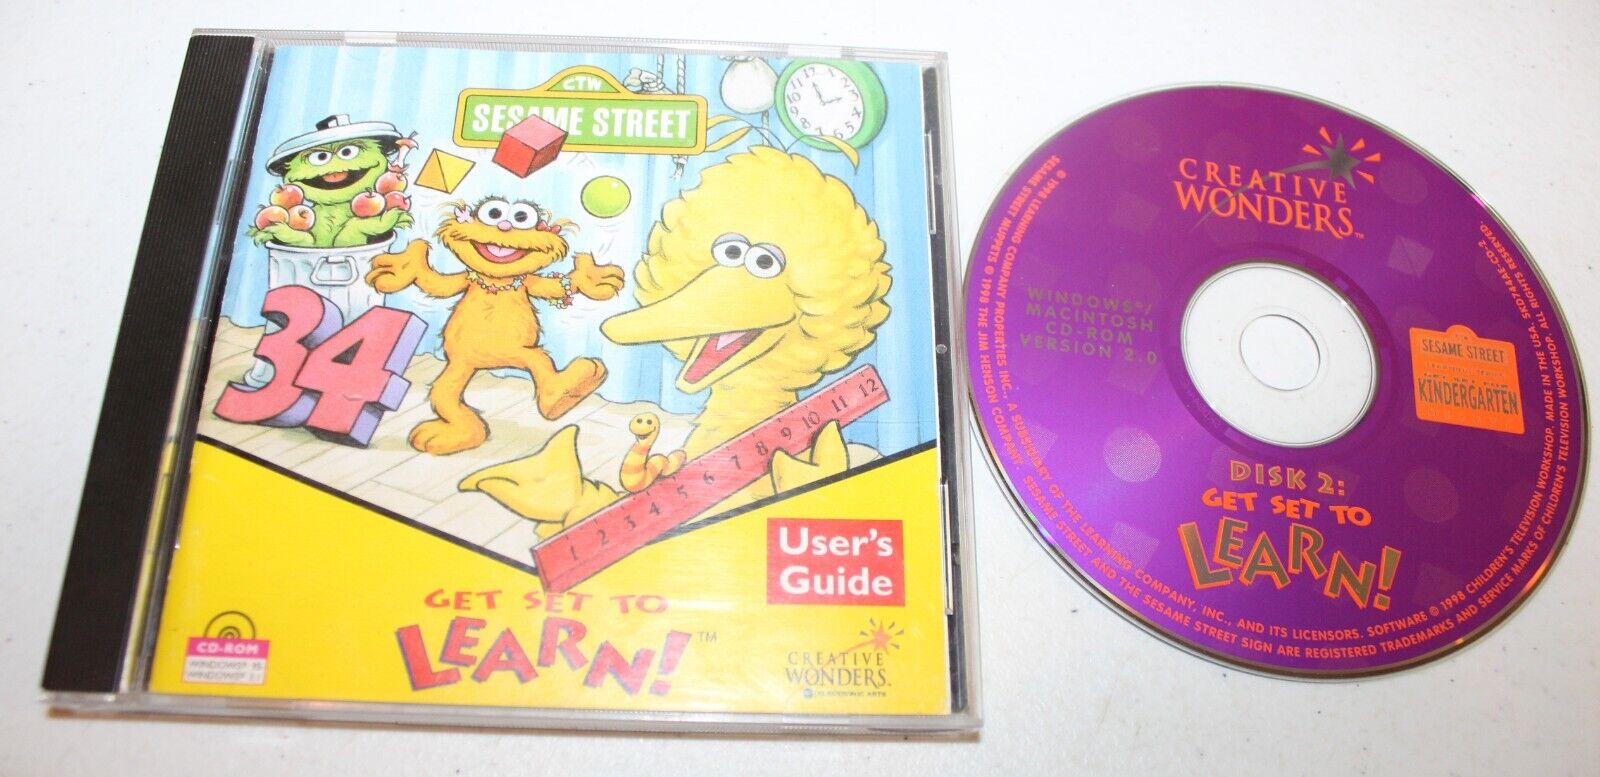 Sesame Street Set To Learn (PC, Windows 95 & 3.1) Creative Wonders, Disc 2